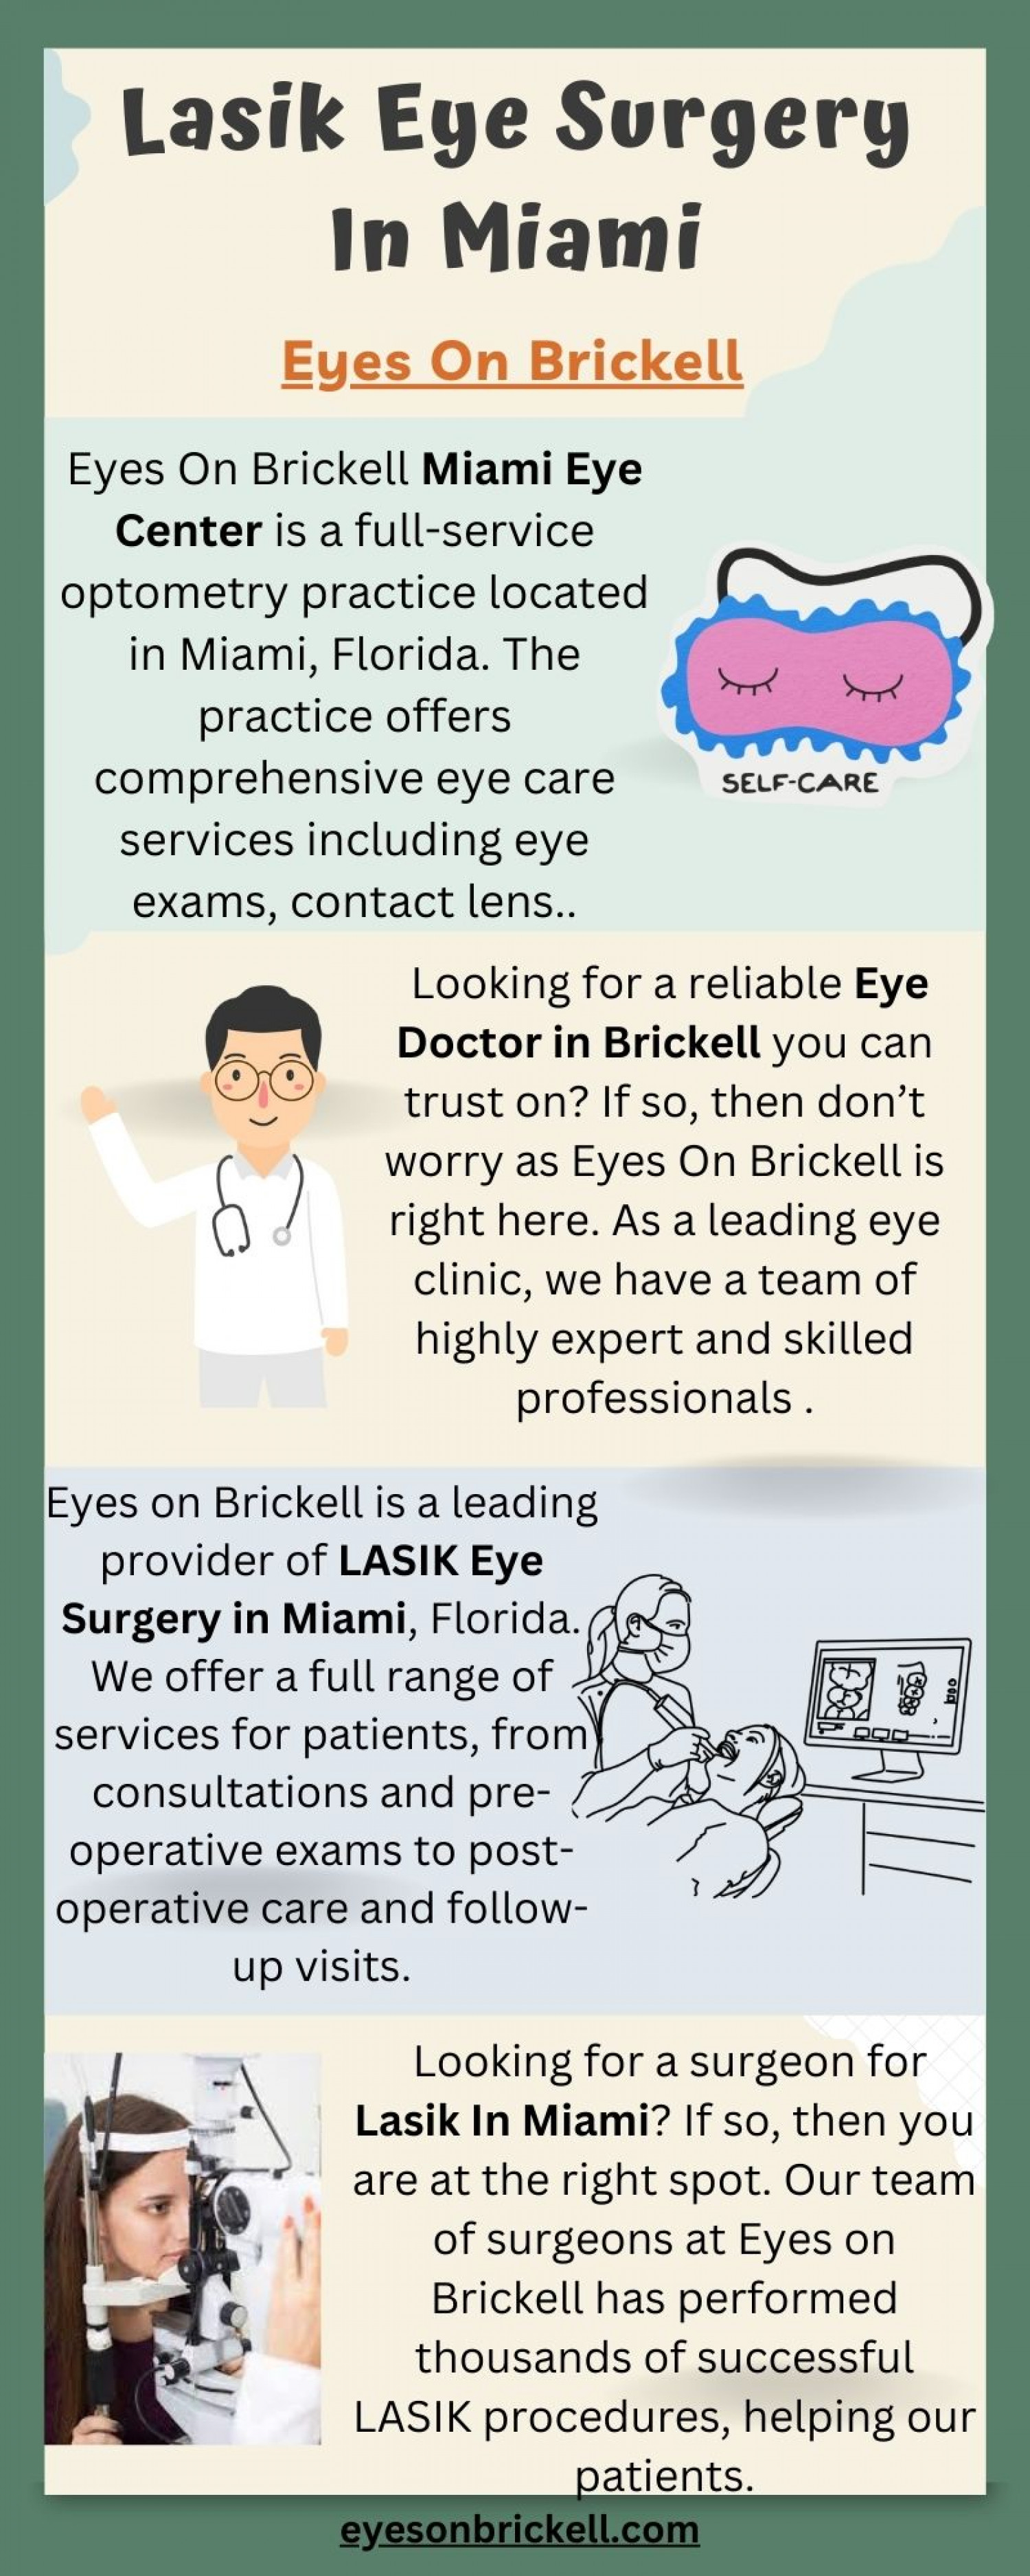 Lasik Eye Surgery In Miami Infographic